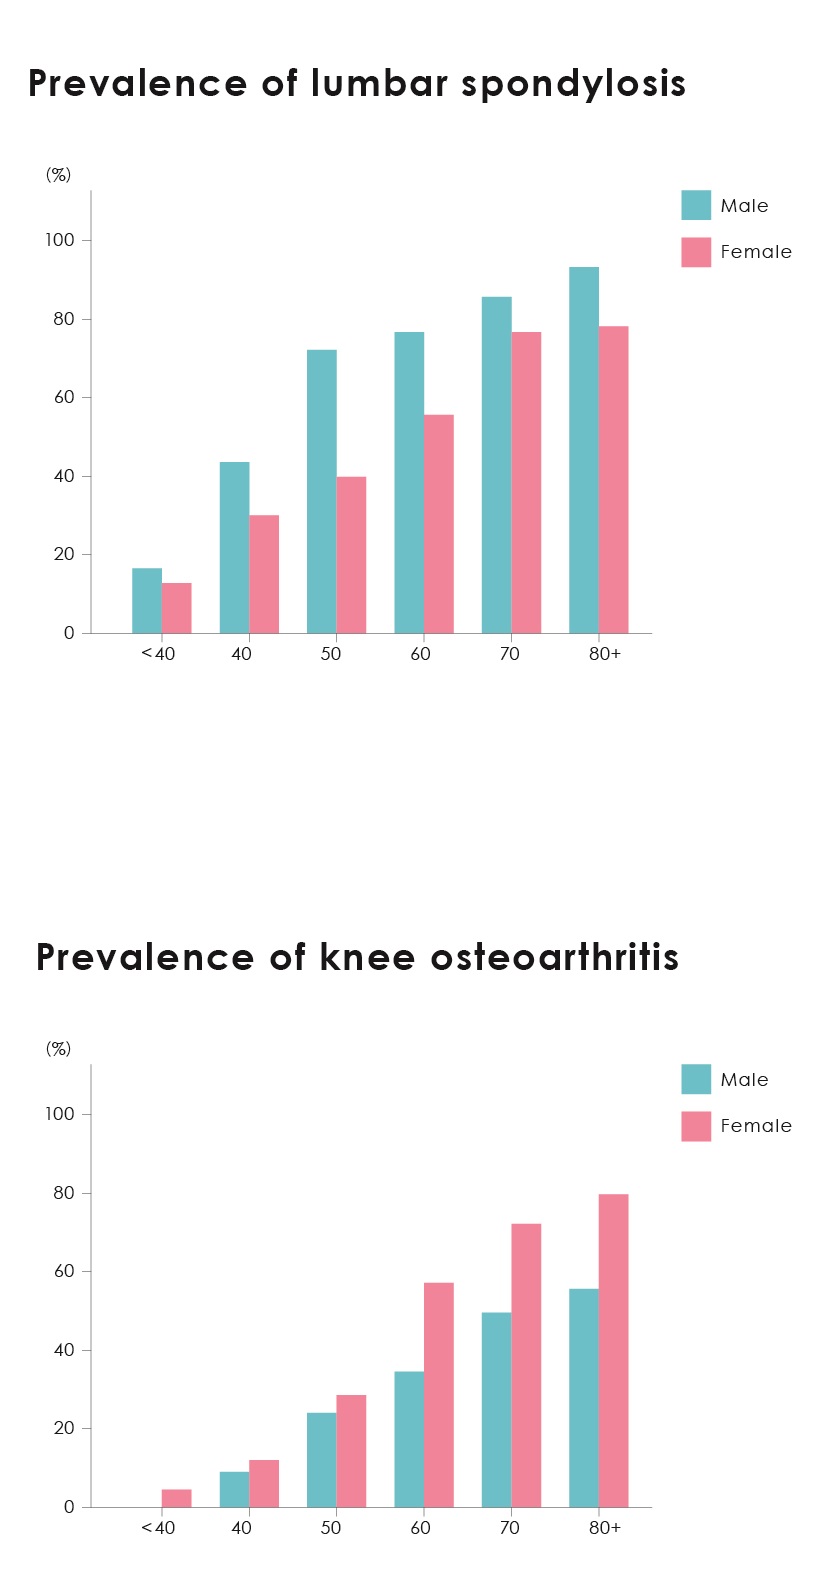 Figure 2. Data on the prevalence of knee osteoarthritis and lumbar spondylosis. From Yoshimura N, et al. J Bone Miner Metabol 27, 620-628, 2009.